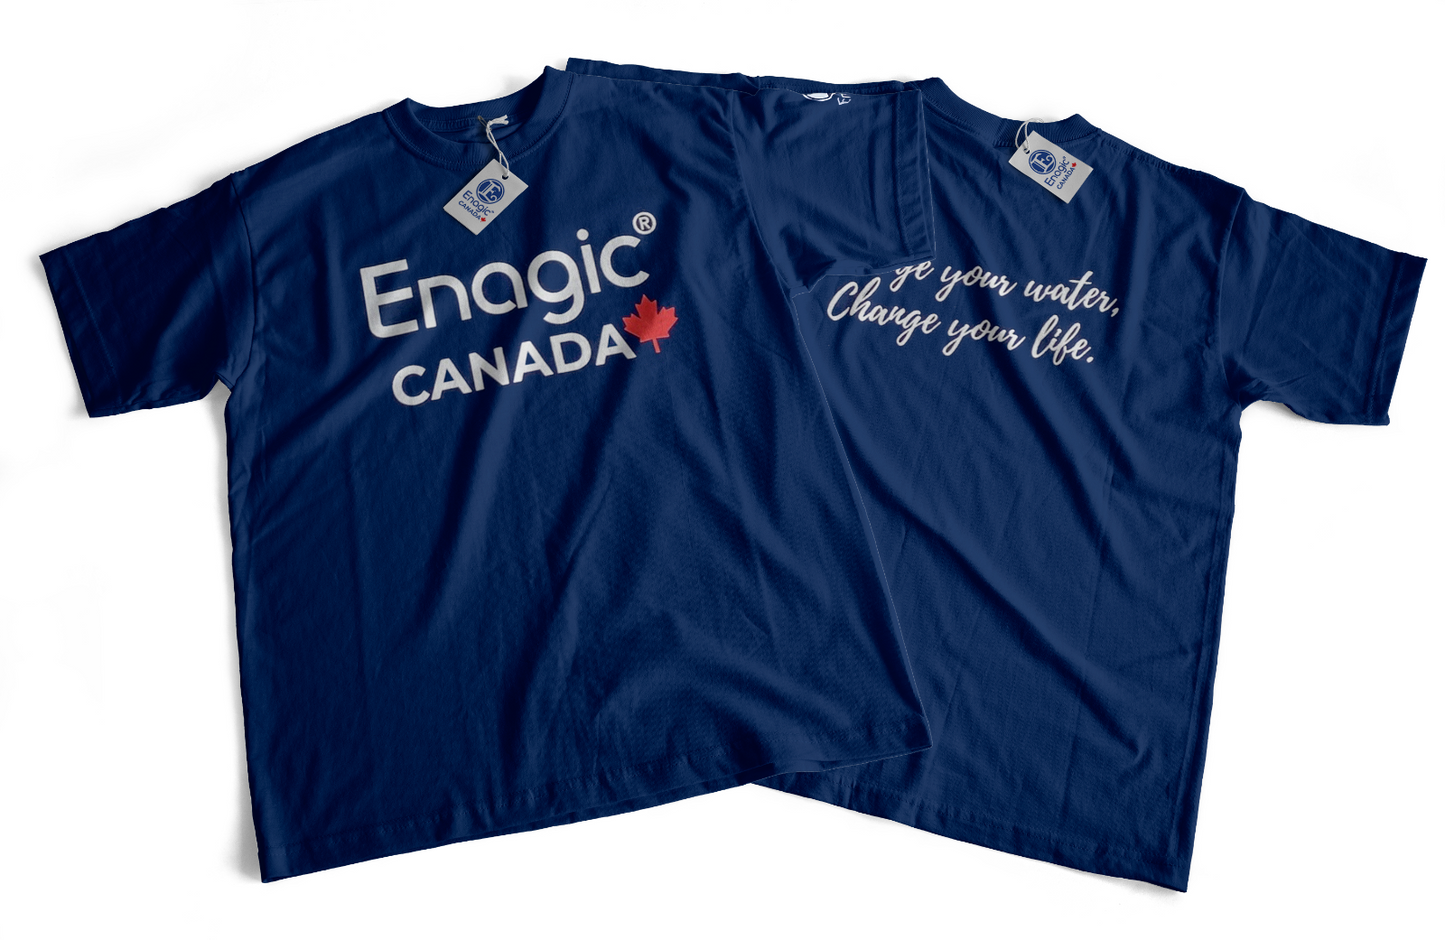 Enagic Kangen Leveluk Canada T-Shirt High Quality Durable Style Small Size NEW